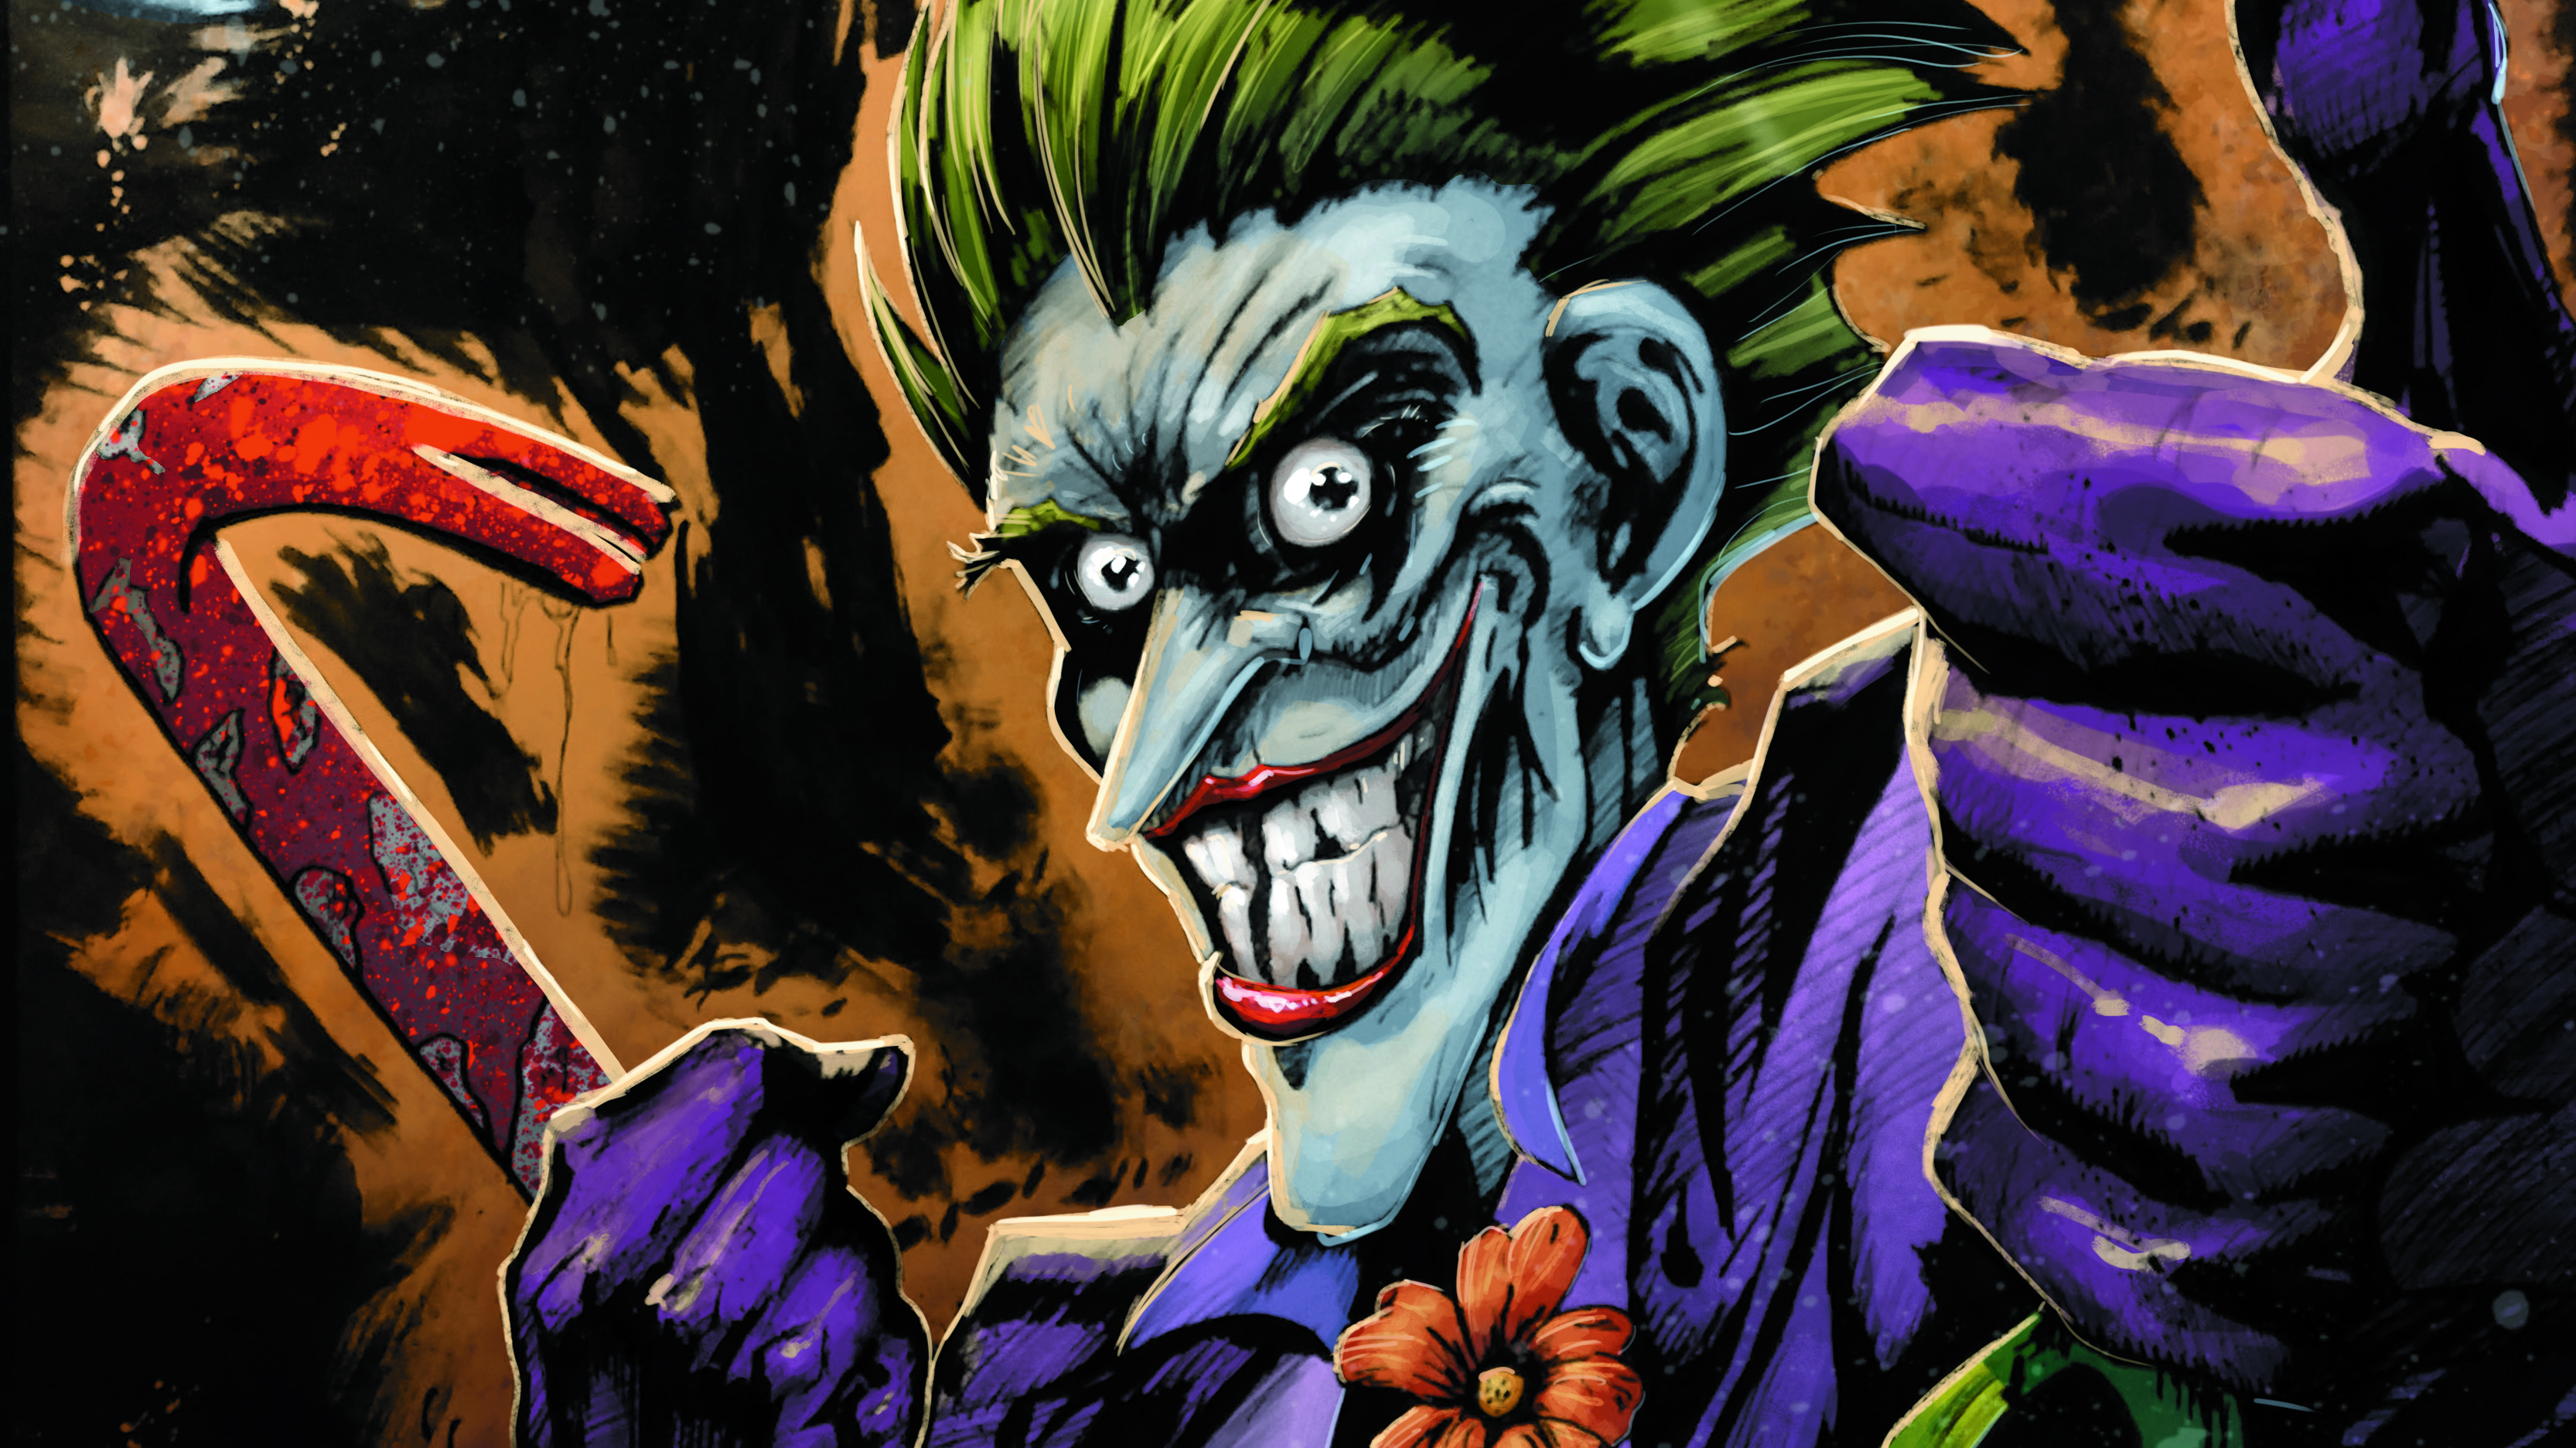 Share 76+ joker comic wallpaper latest - in.cdgdbentre